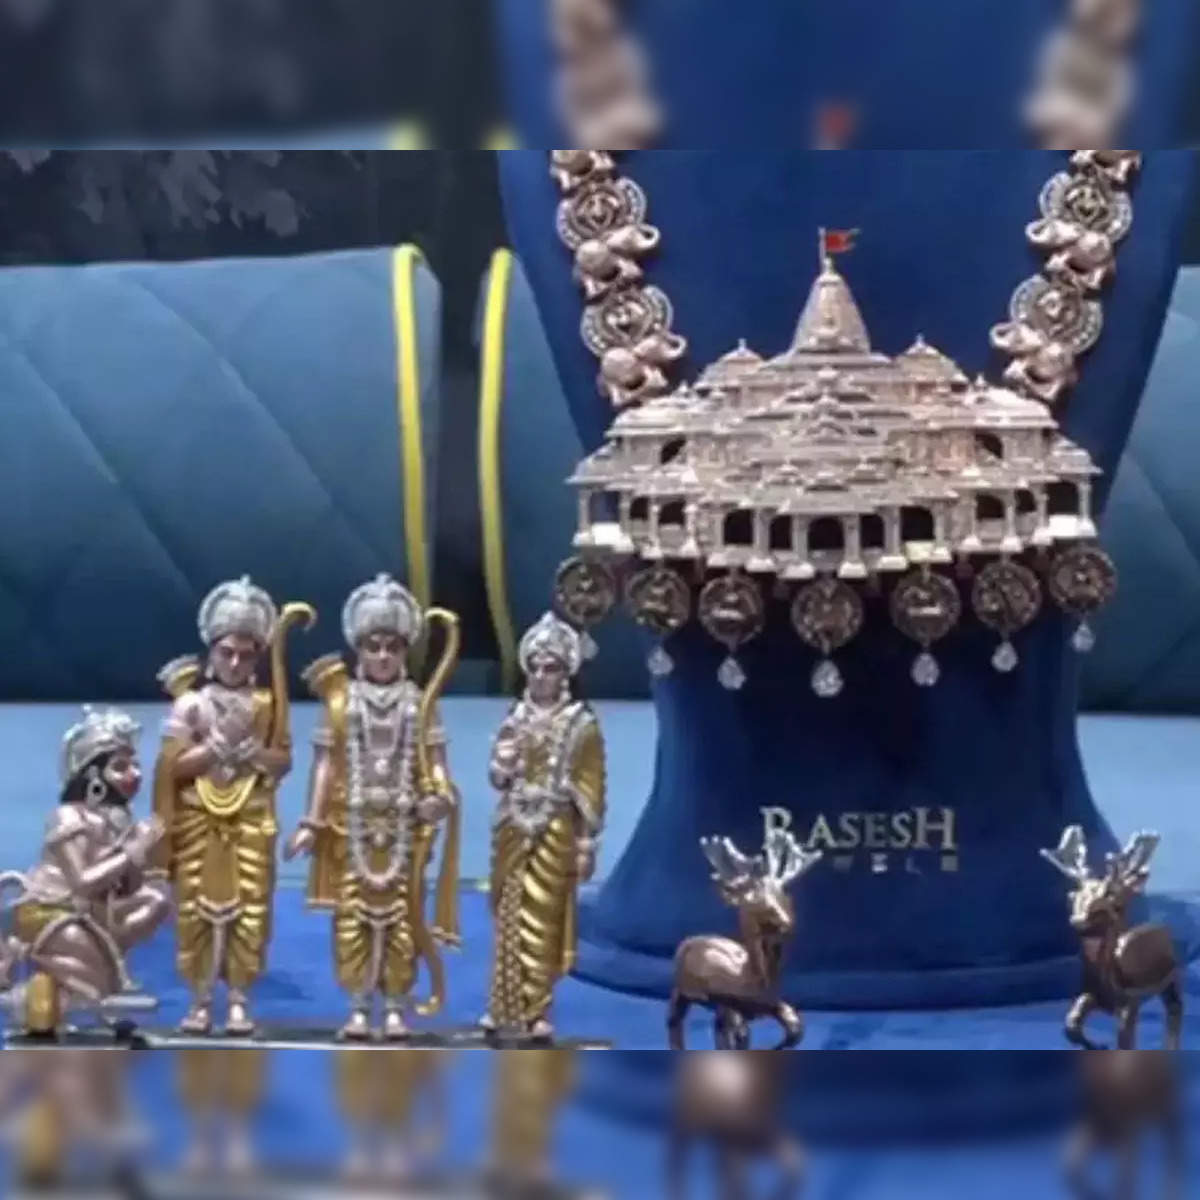 The Kanya Silver Bangles-Buy Temple Jewellery Bangles Online — KO Jewellery